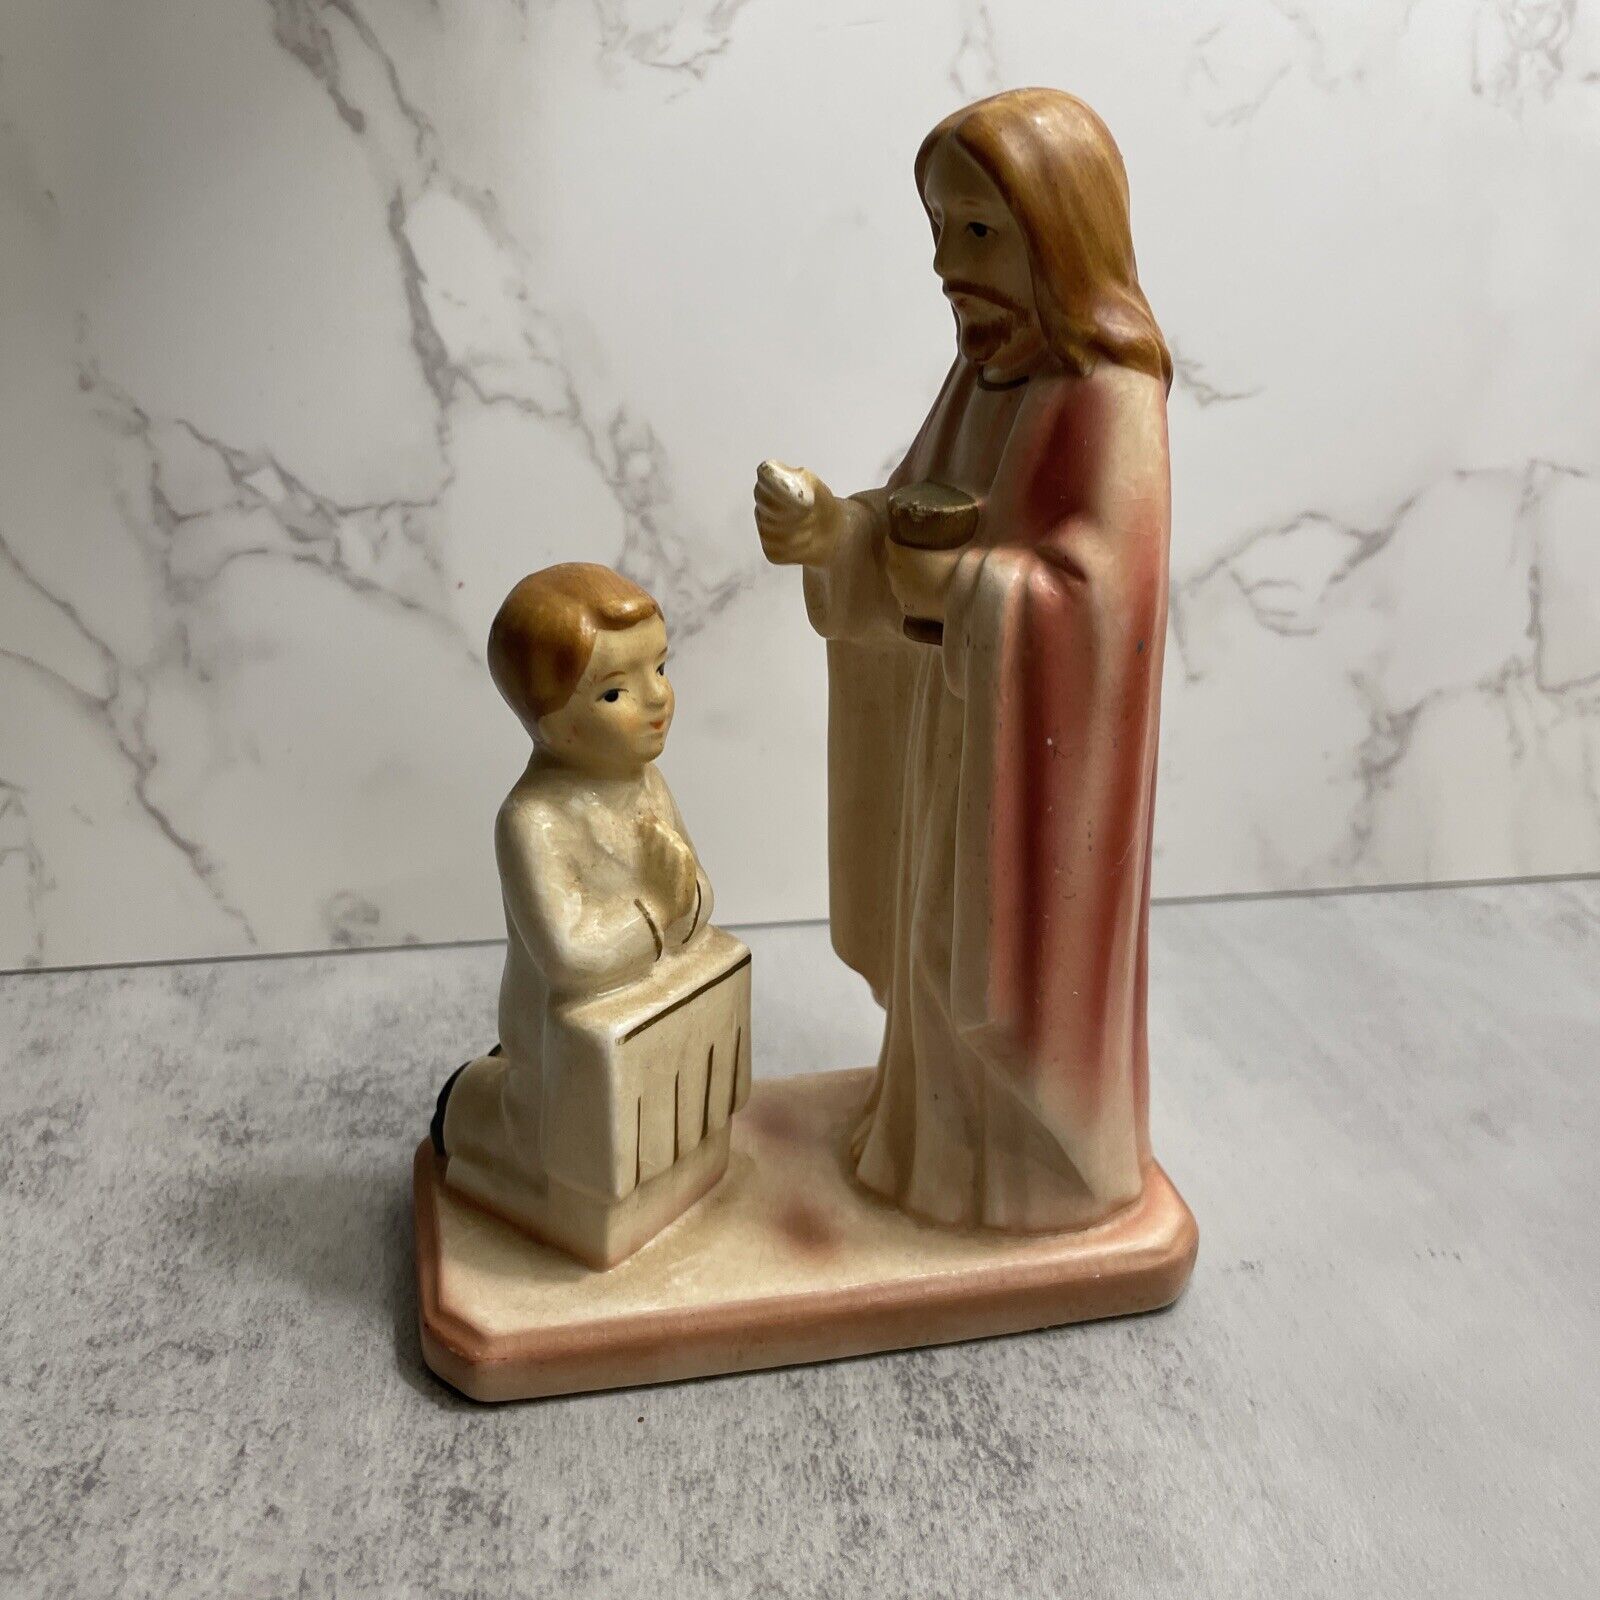 Vintage Sanmyro Japan Catholic Confirmation Gift Figurine Jesus and Boy